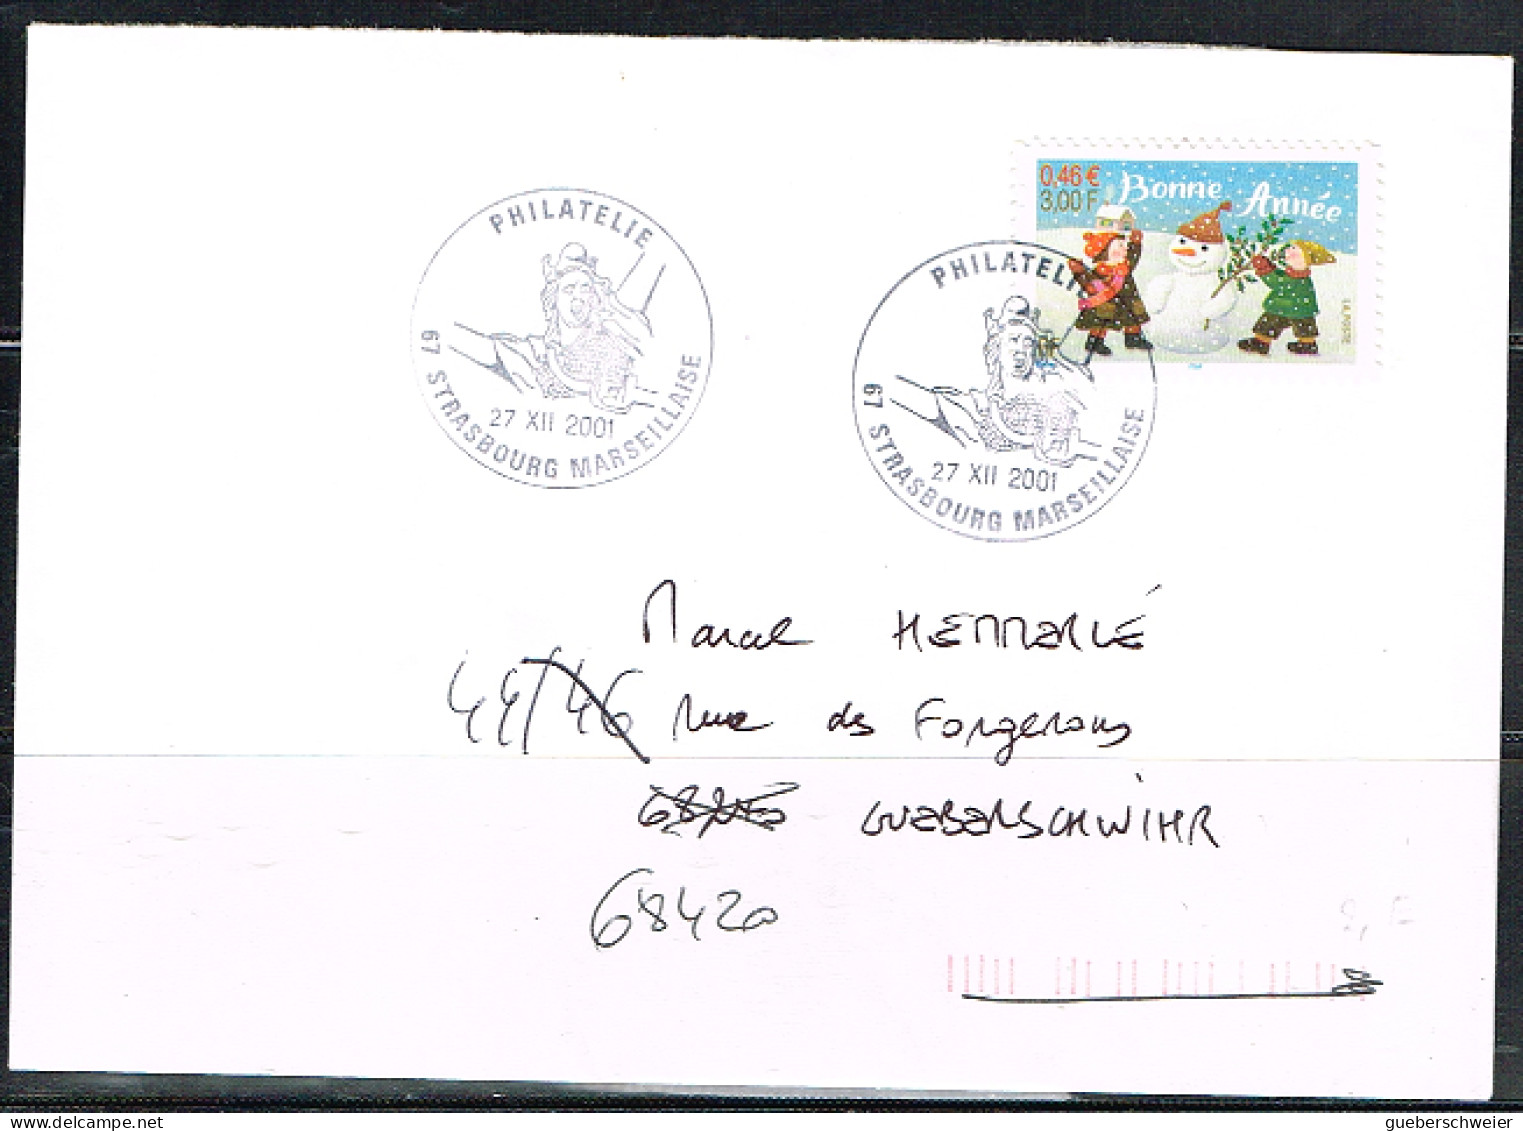 AN-L19 - FRANCE Cachet Comm. Philatélie Strasbourg Marseillaise 2001 - Commemorative Postmarks